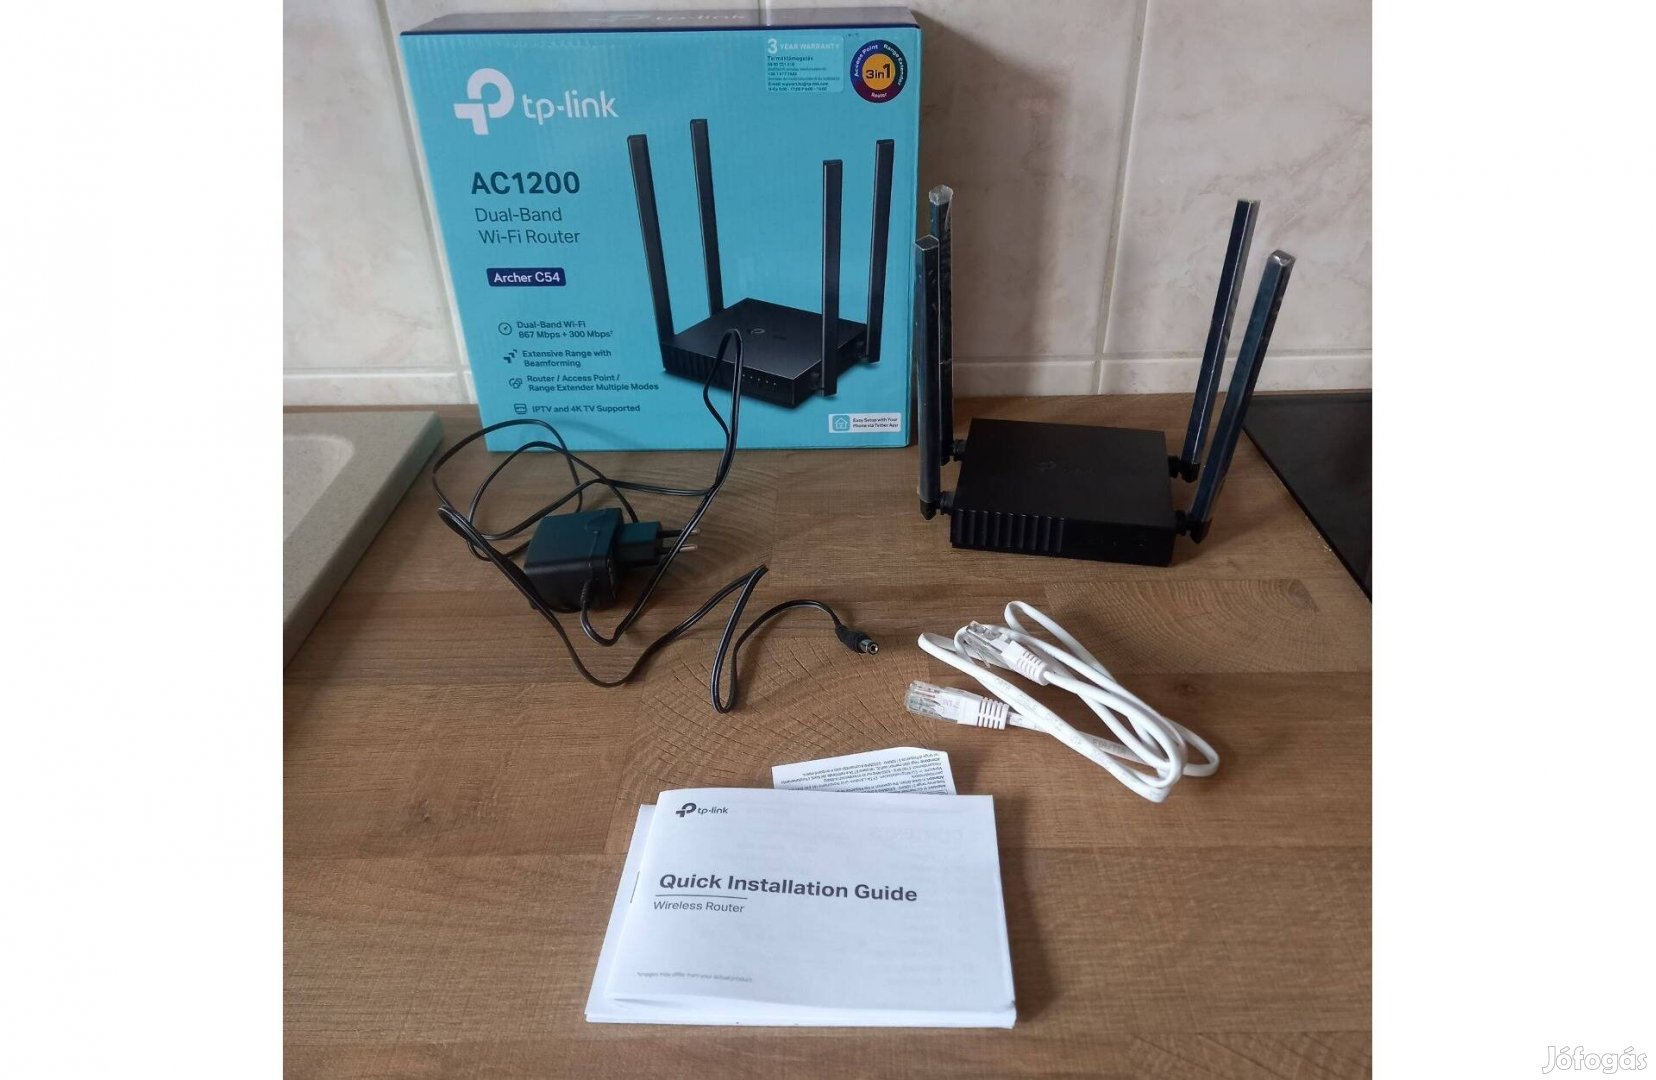 TP-Link Archer C54 AC 1200-as wi-fi Router eladó